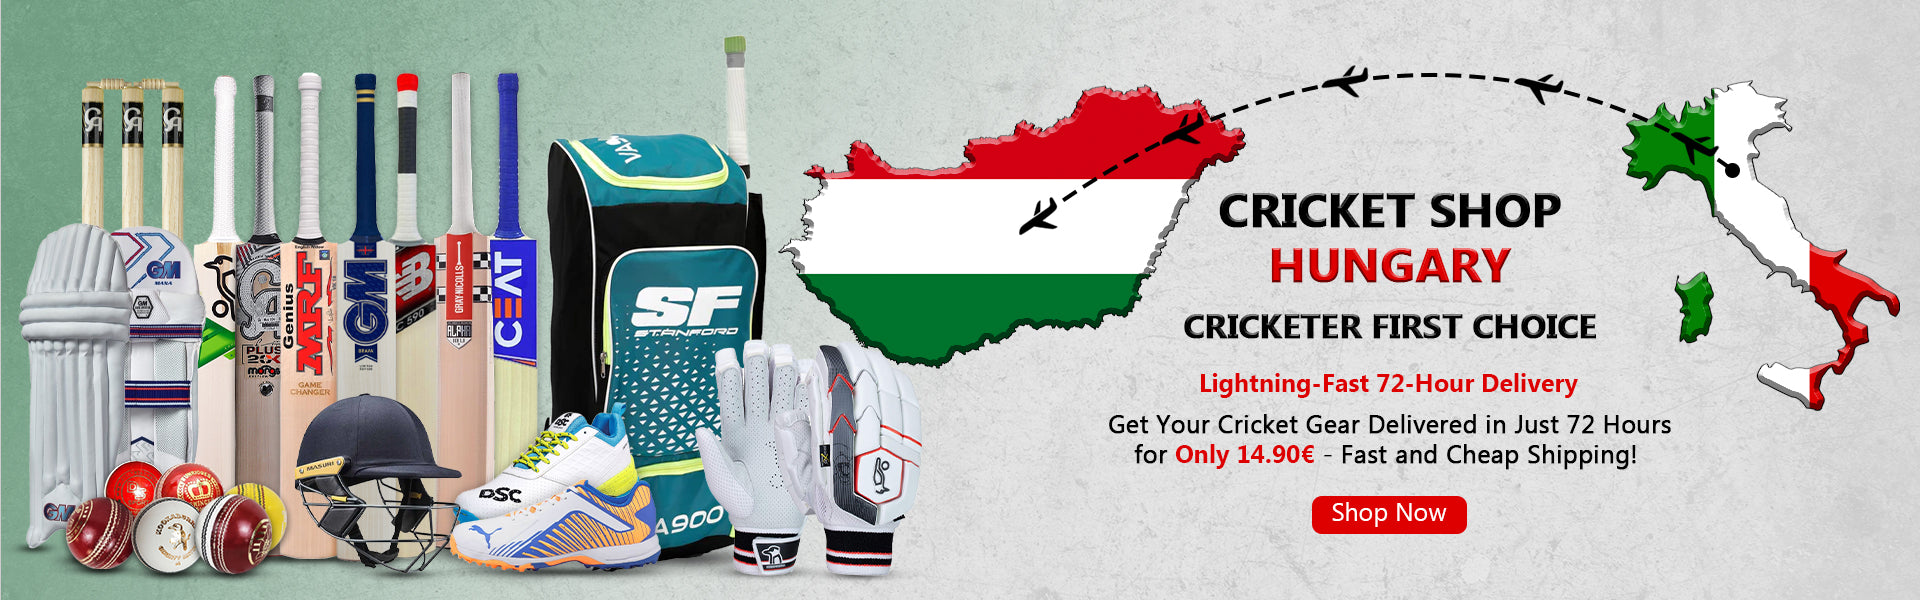 Cricket Shop Hungary | Cricketer first Choice